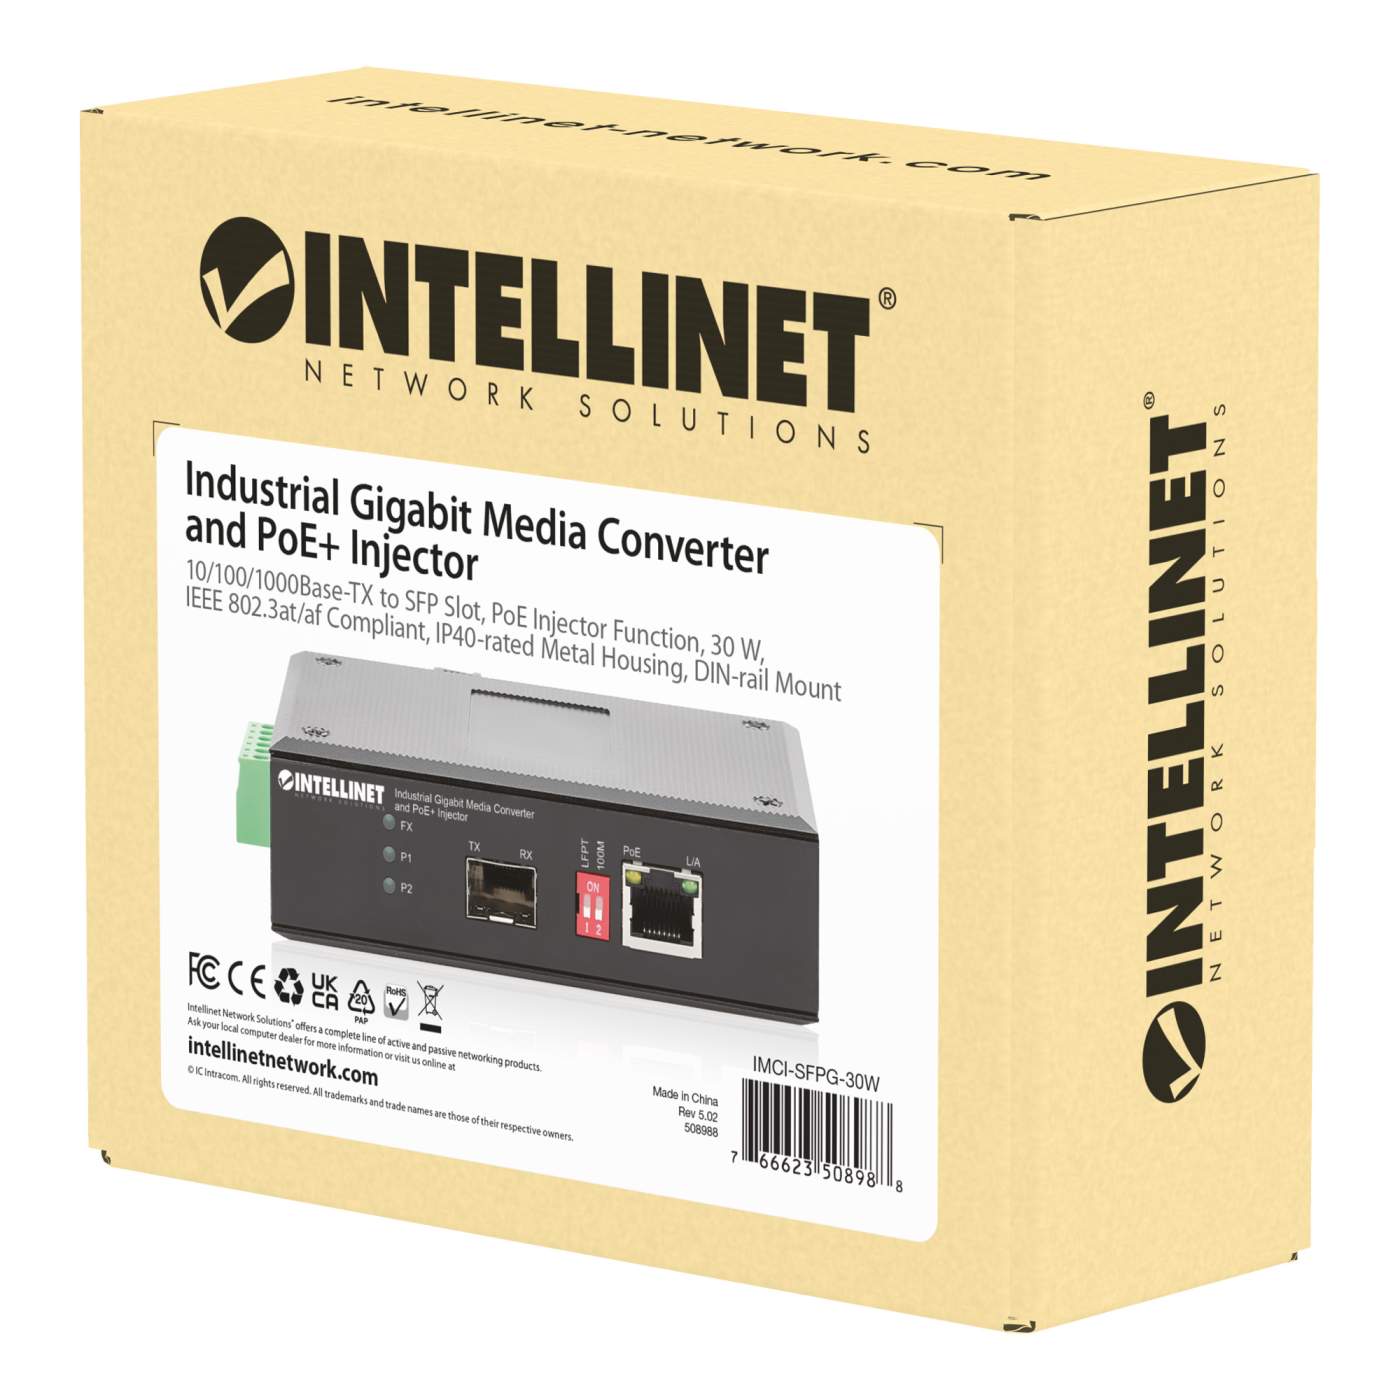 Industrial Gigabit Media Converter and PoE+ Injector Packaging Image 2